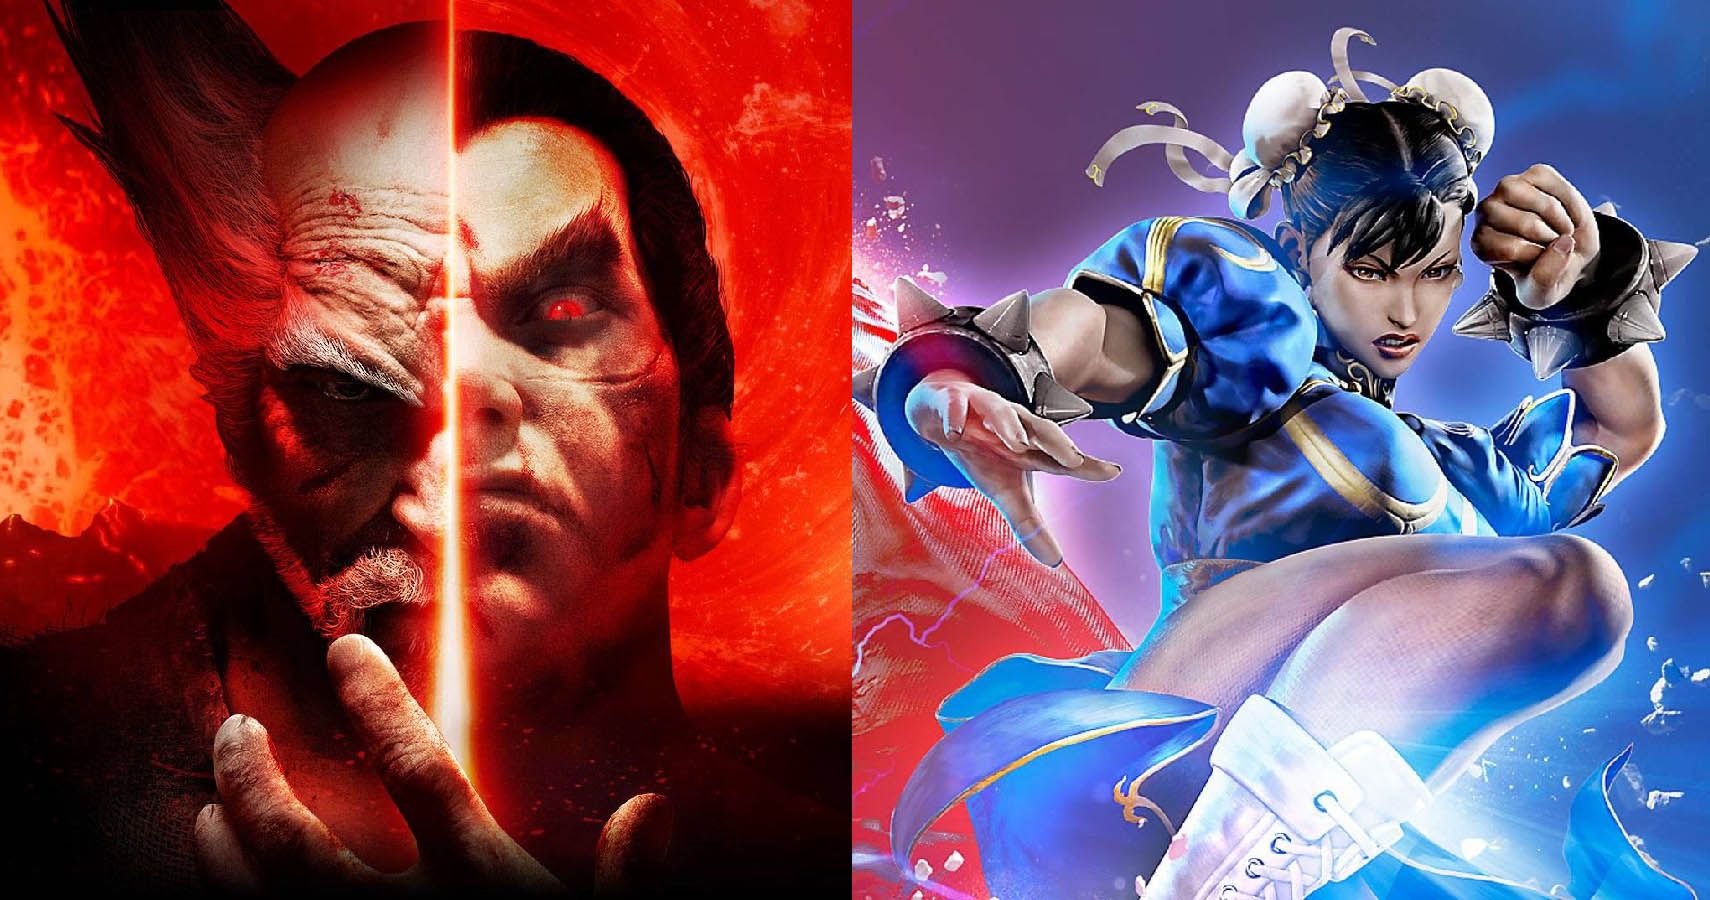 Street Fighter V: Arcade Edition - Metacritic